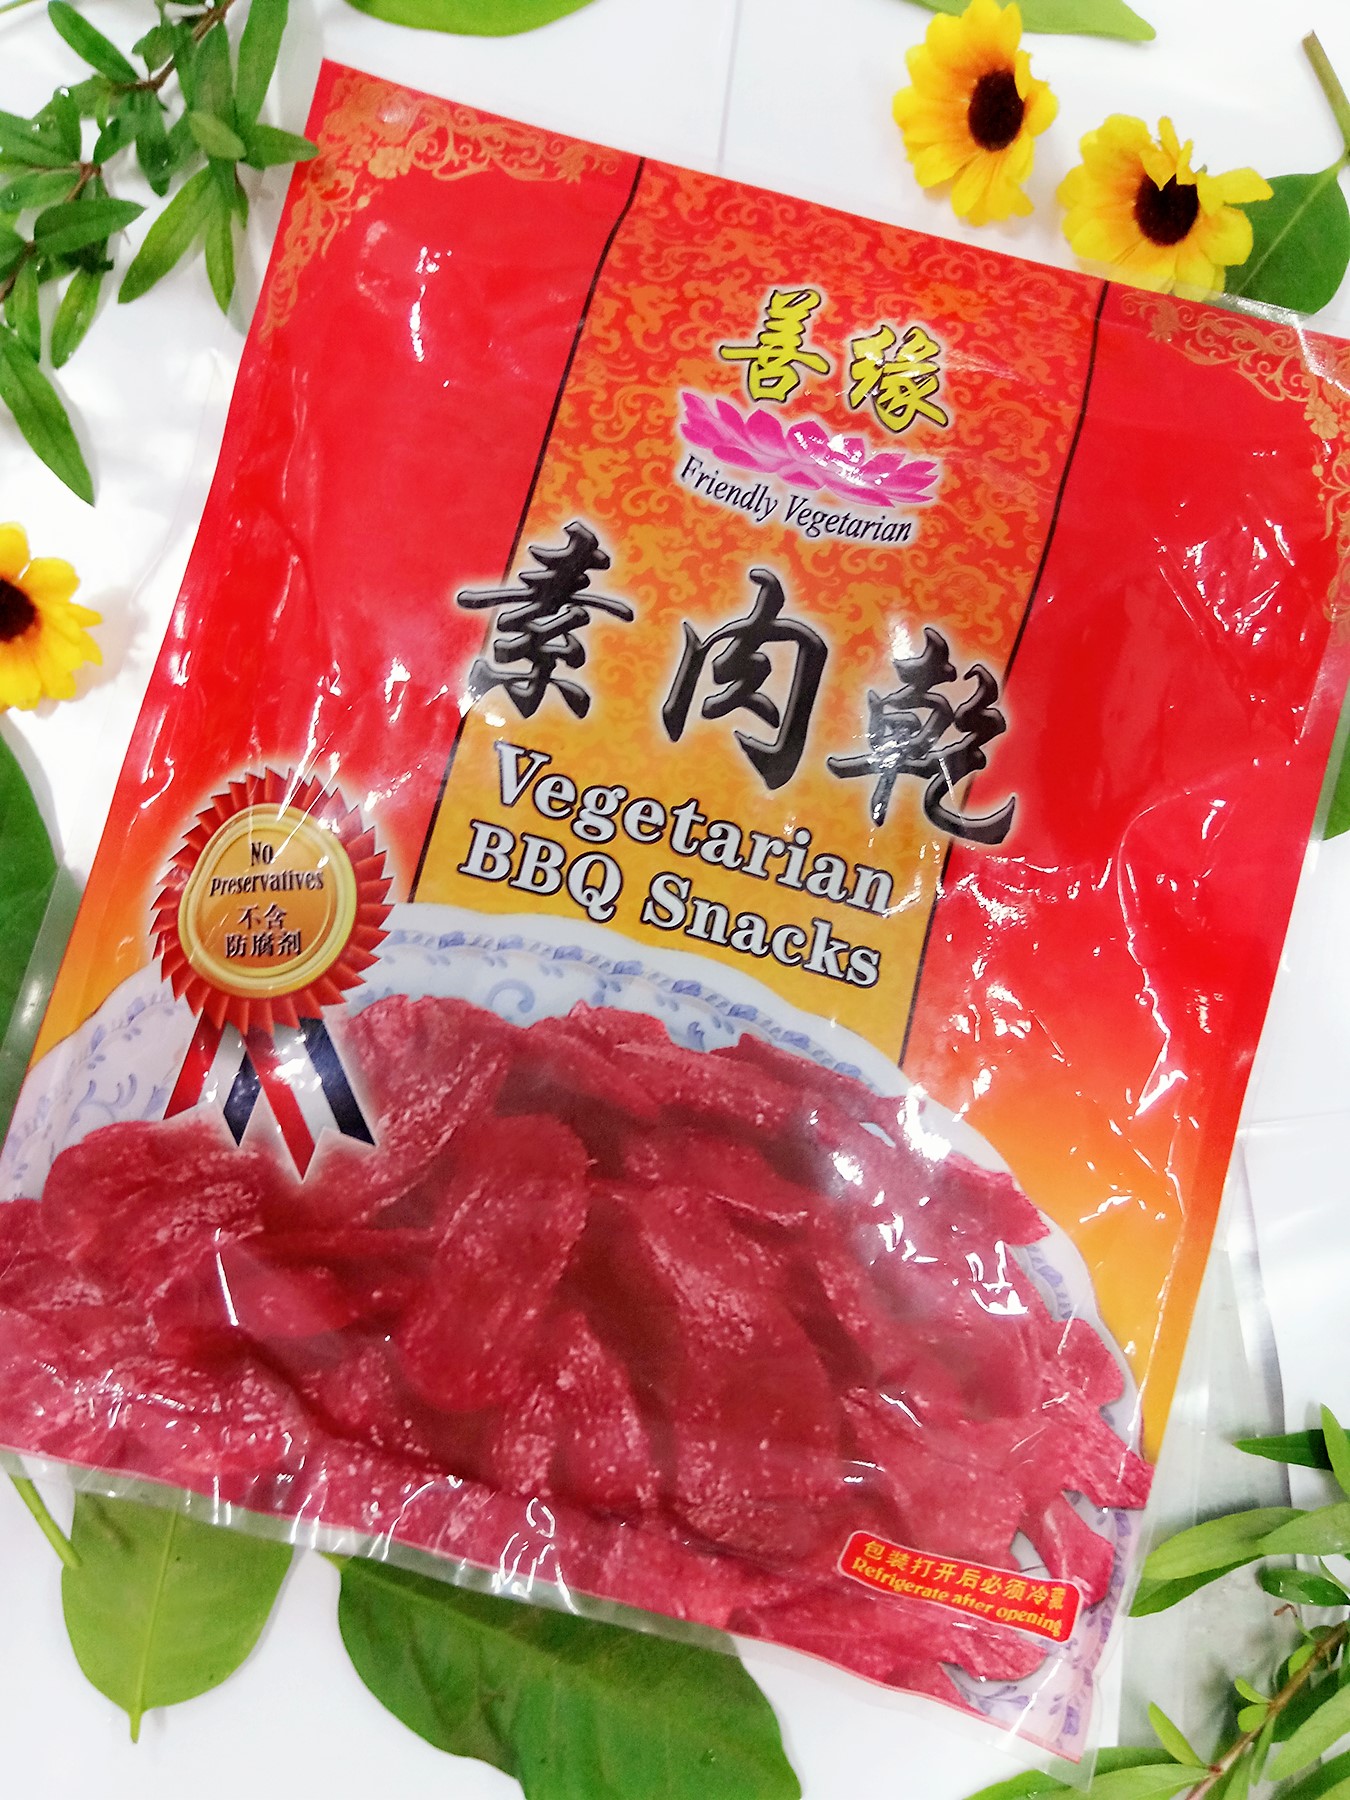 Image Friendly BBQ Snack Spicy Carton 善缘-辣味素肉干(圆形) 3000grams